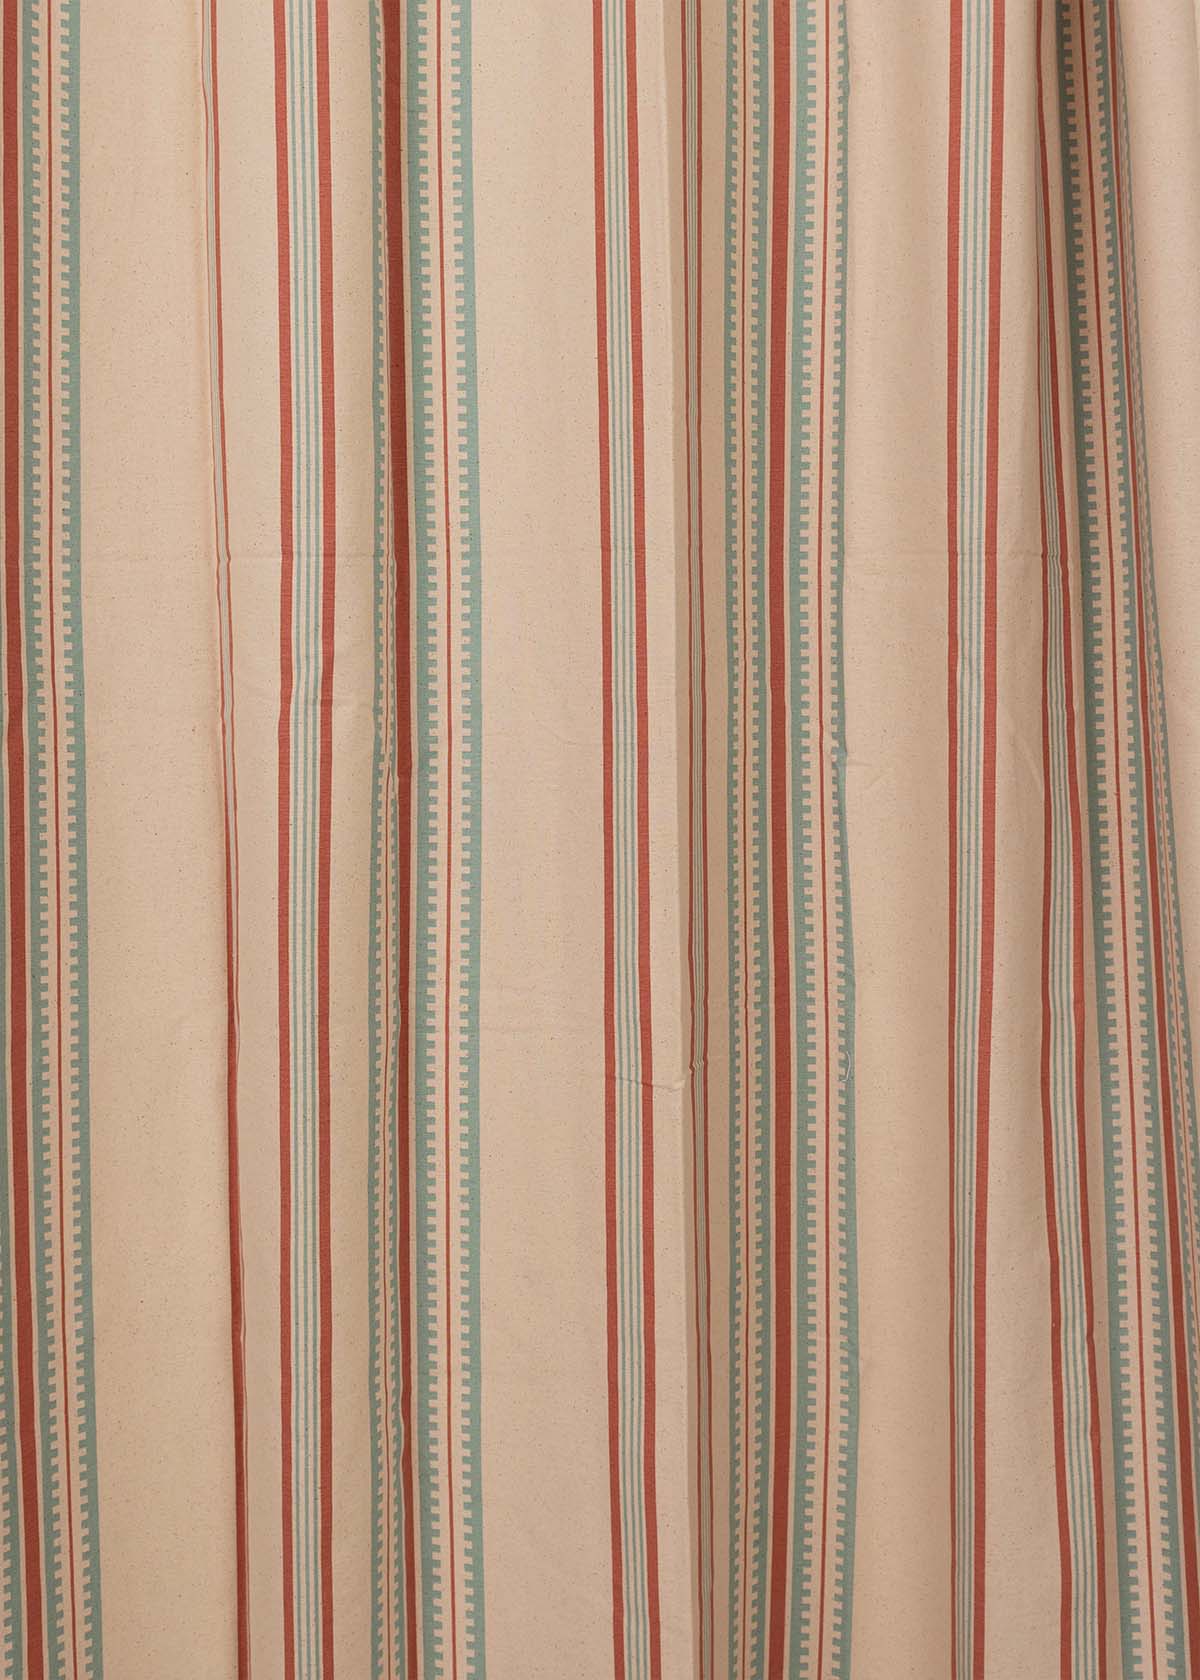 Roman Stripes 100% Customizable Cotton geometric curtain for bed room - Room darkening - Multicolor